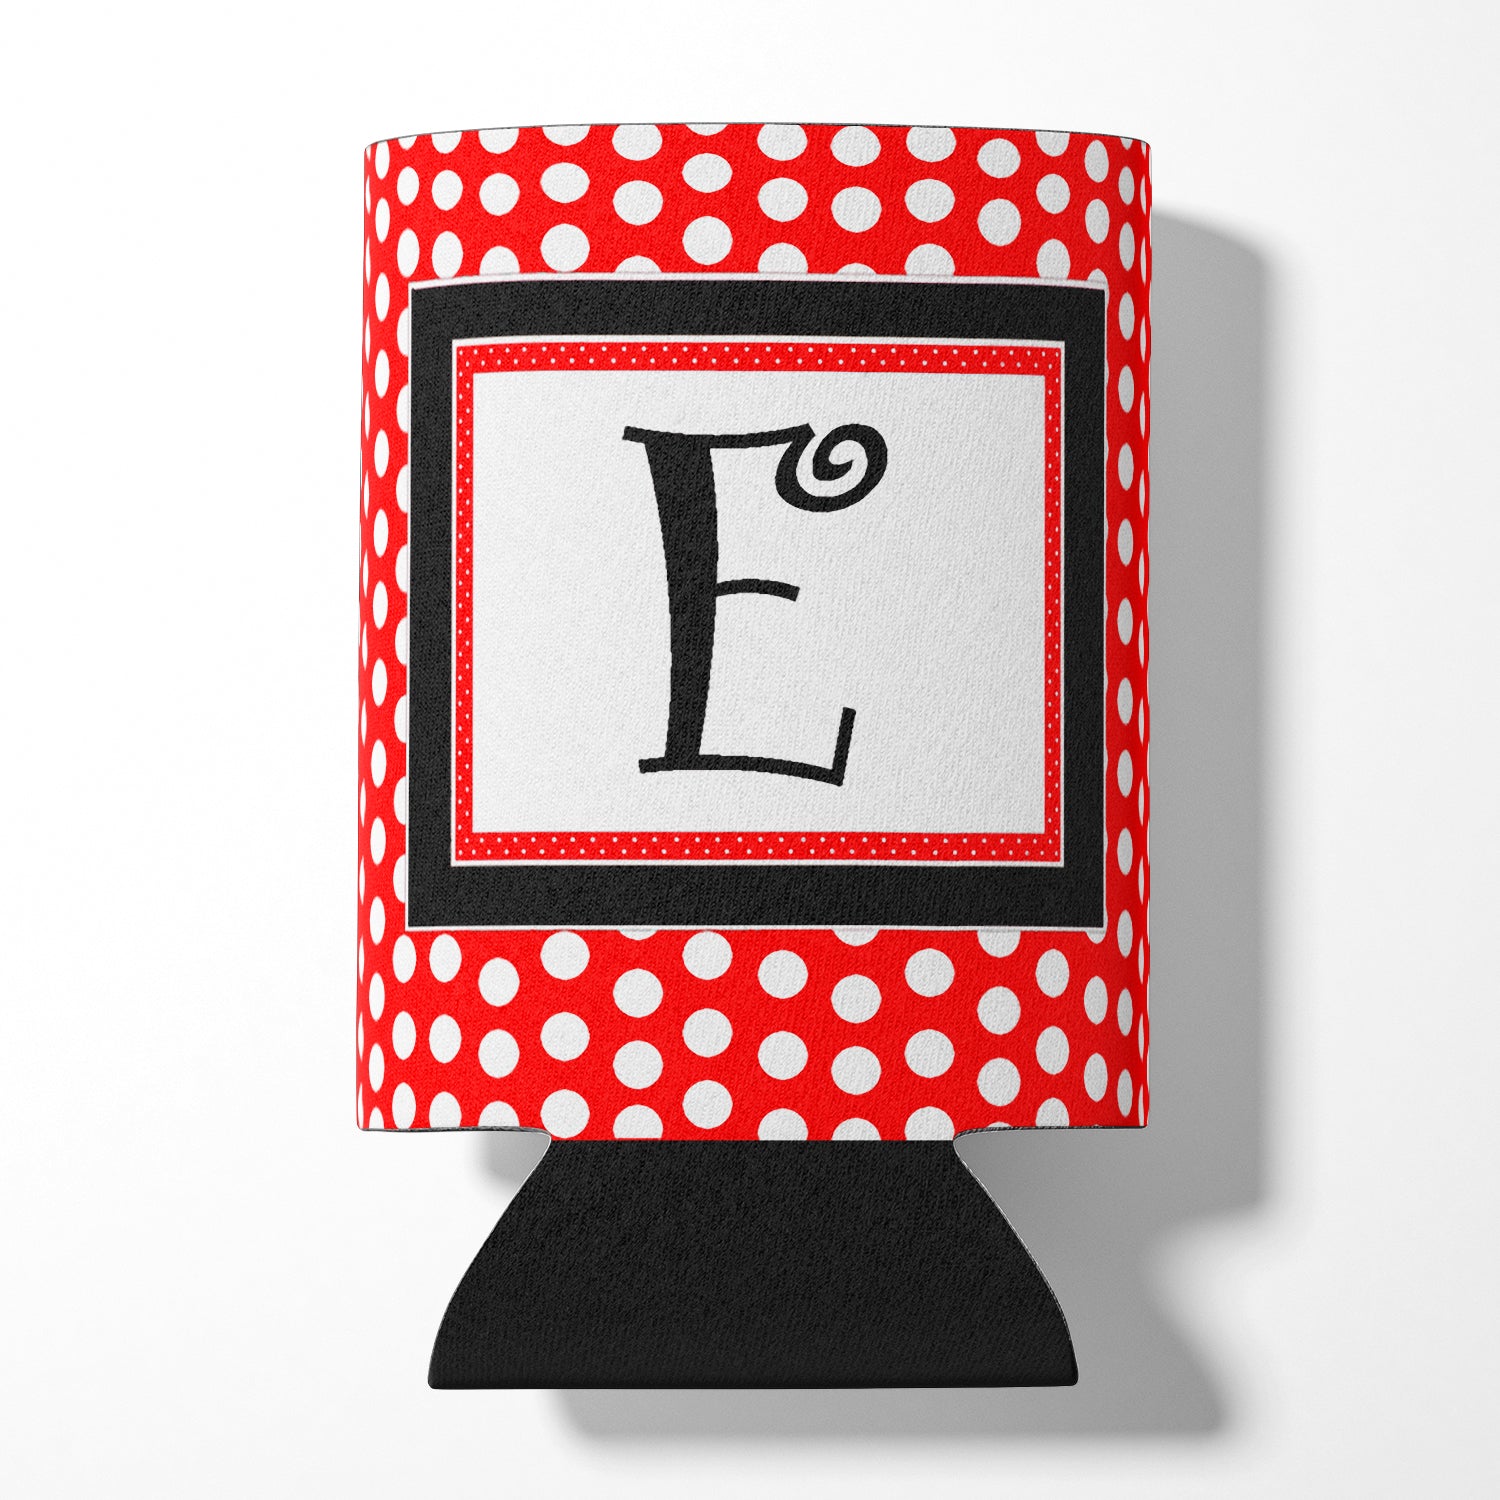 Letter E Initial Monogram - Red Black Polka Dots Can or Bottle Beverage Insulator Hugger.